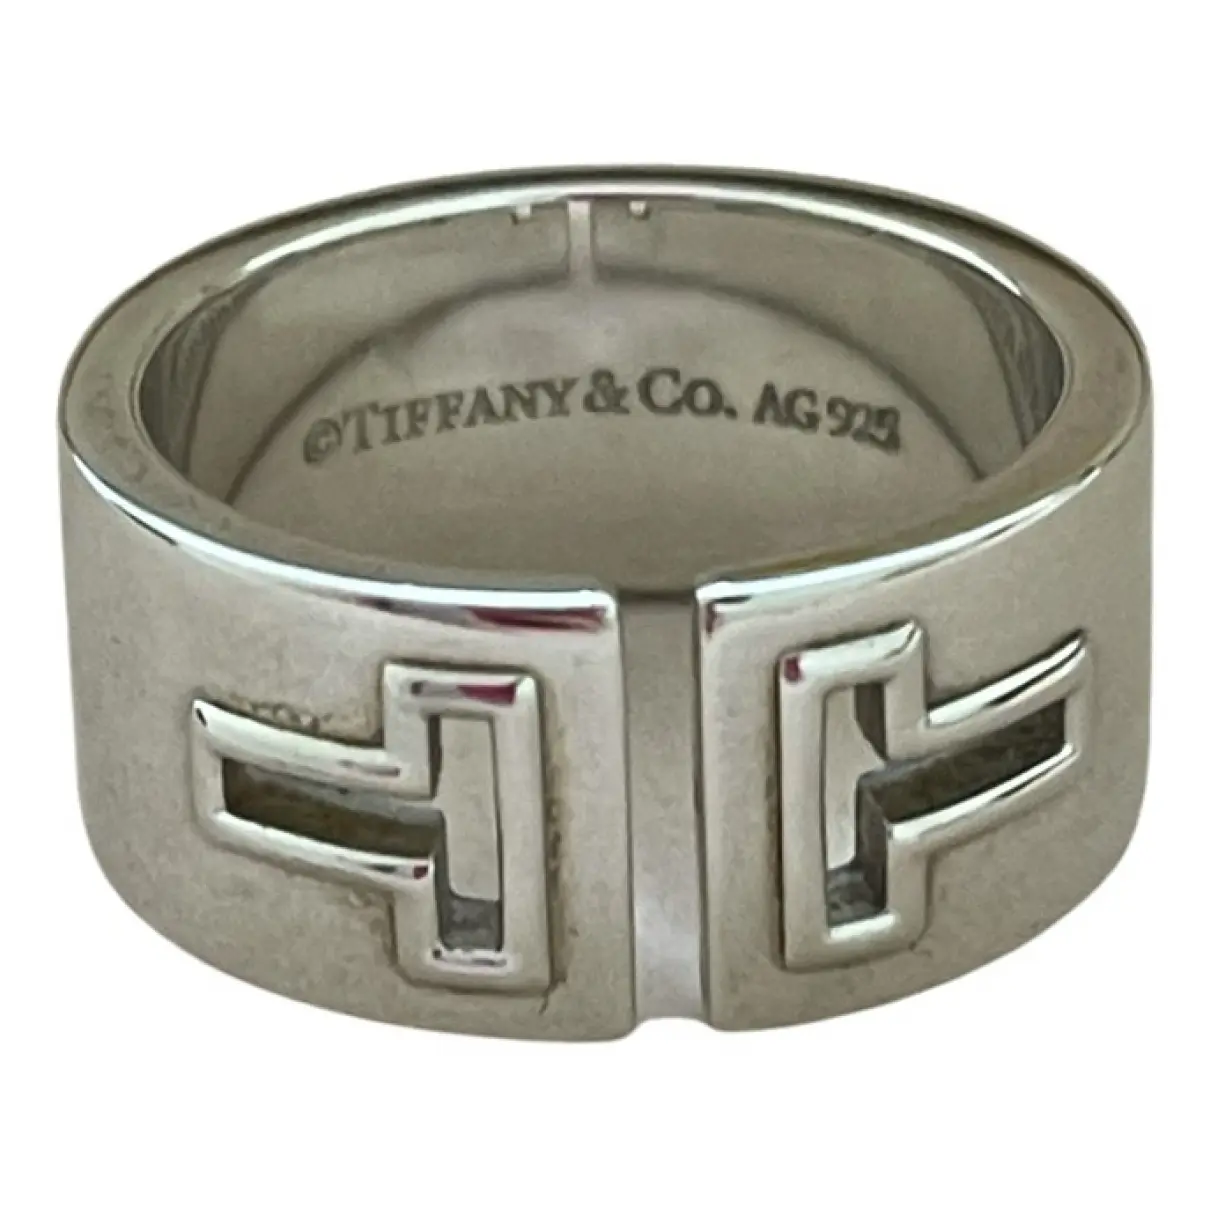 Tiffany T silver ring Tiffany & Co